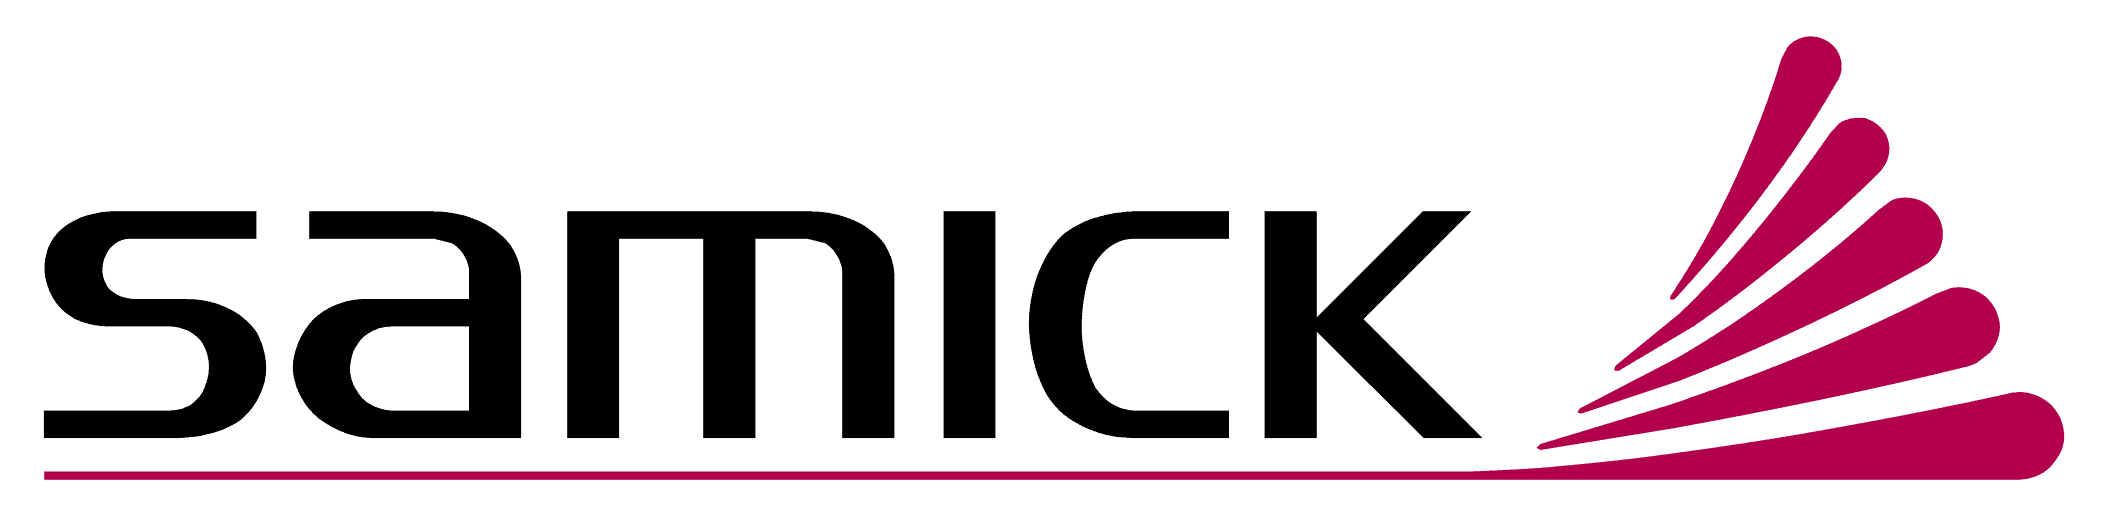 Samick Logo